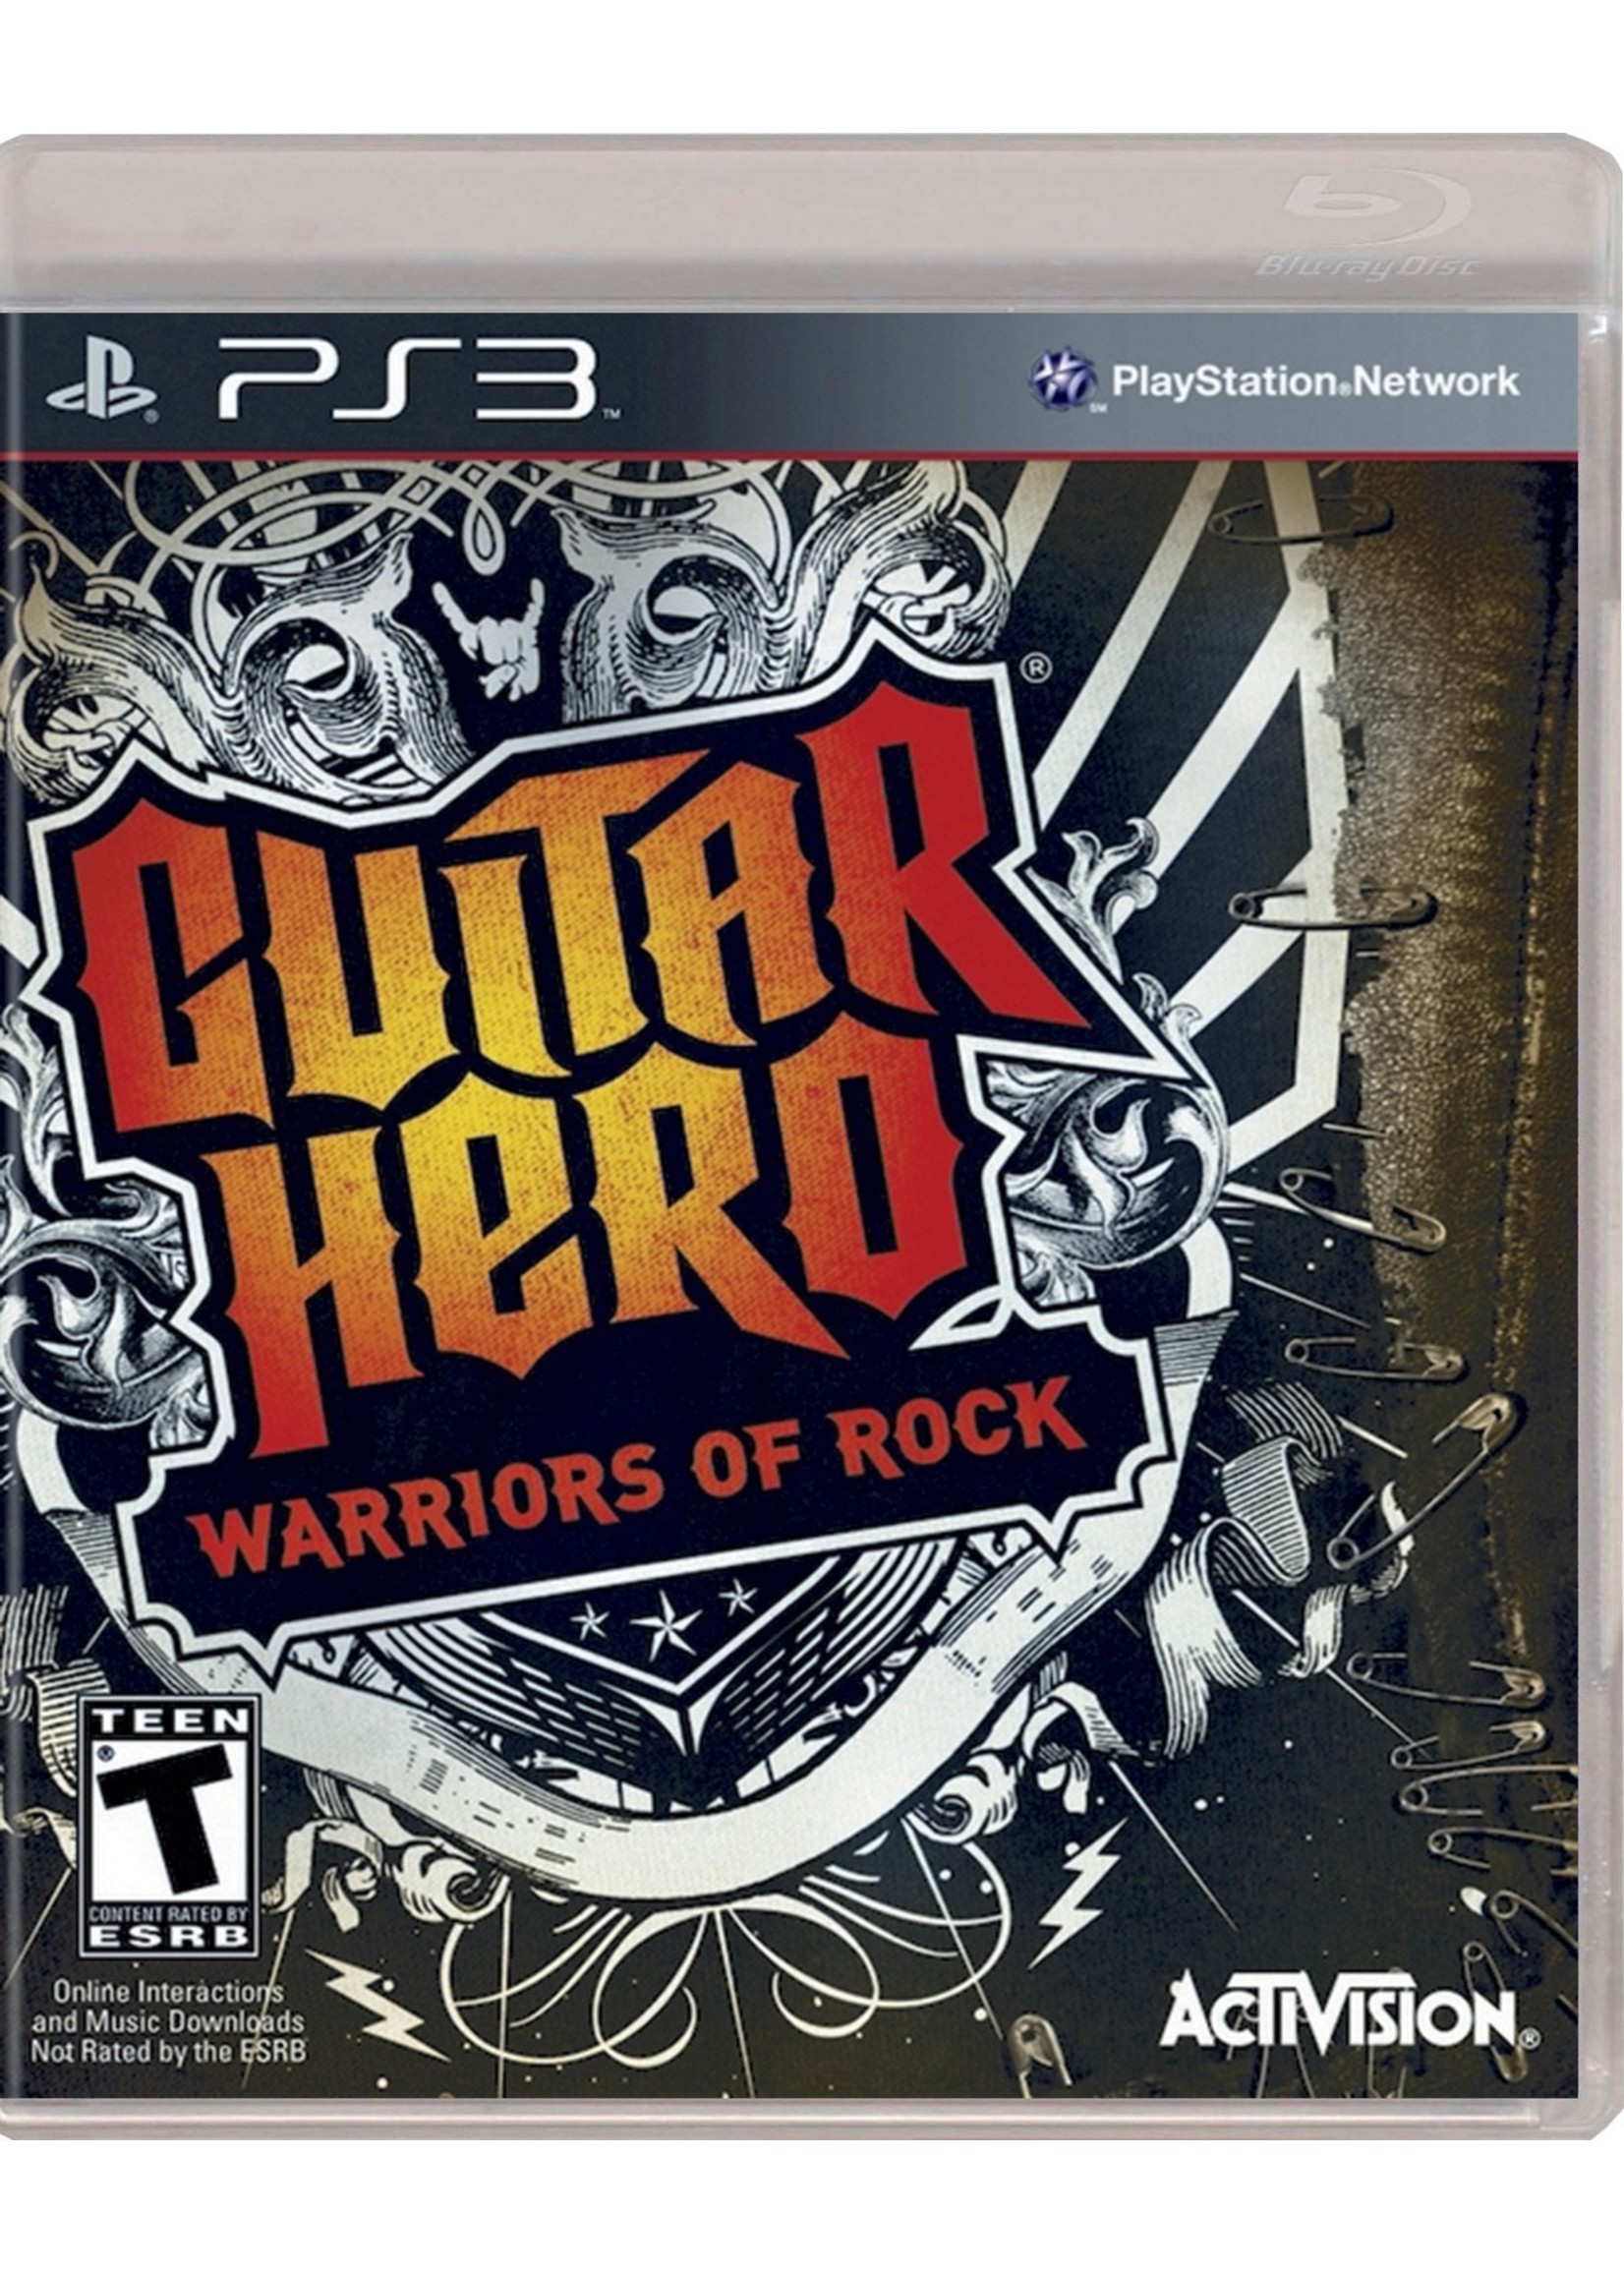 Sony Playstation 3 (PS3) Guitar Hero Warriors of Rock